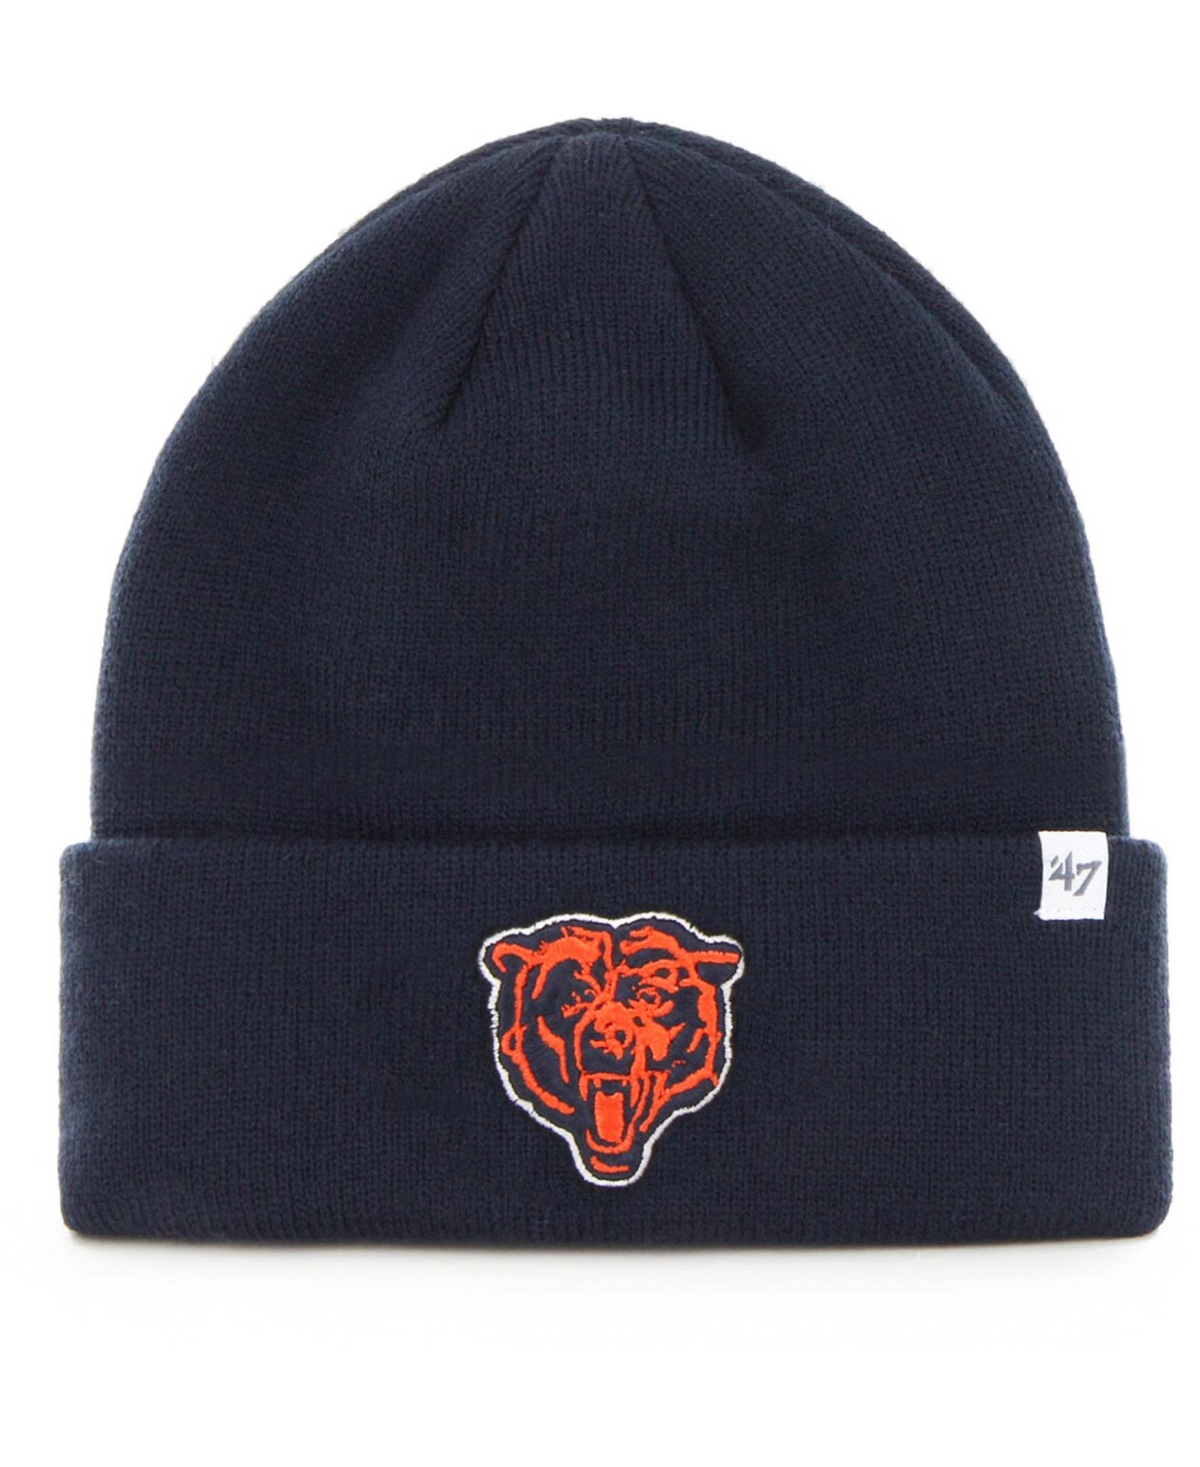 47 Brand Kids' Big Boys And Girls Navy Chicago Bears Basic Cuffed Knit Hat